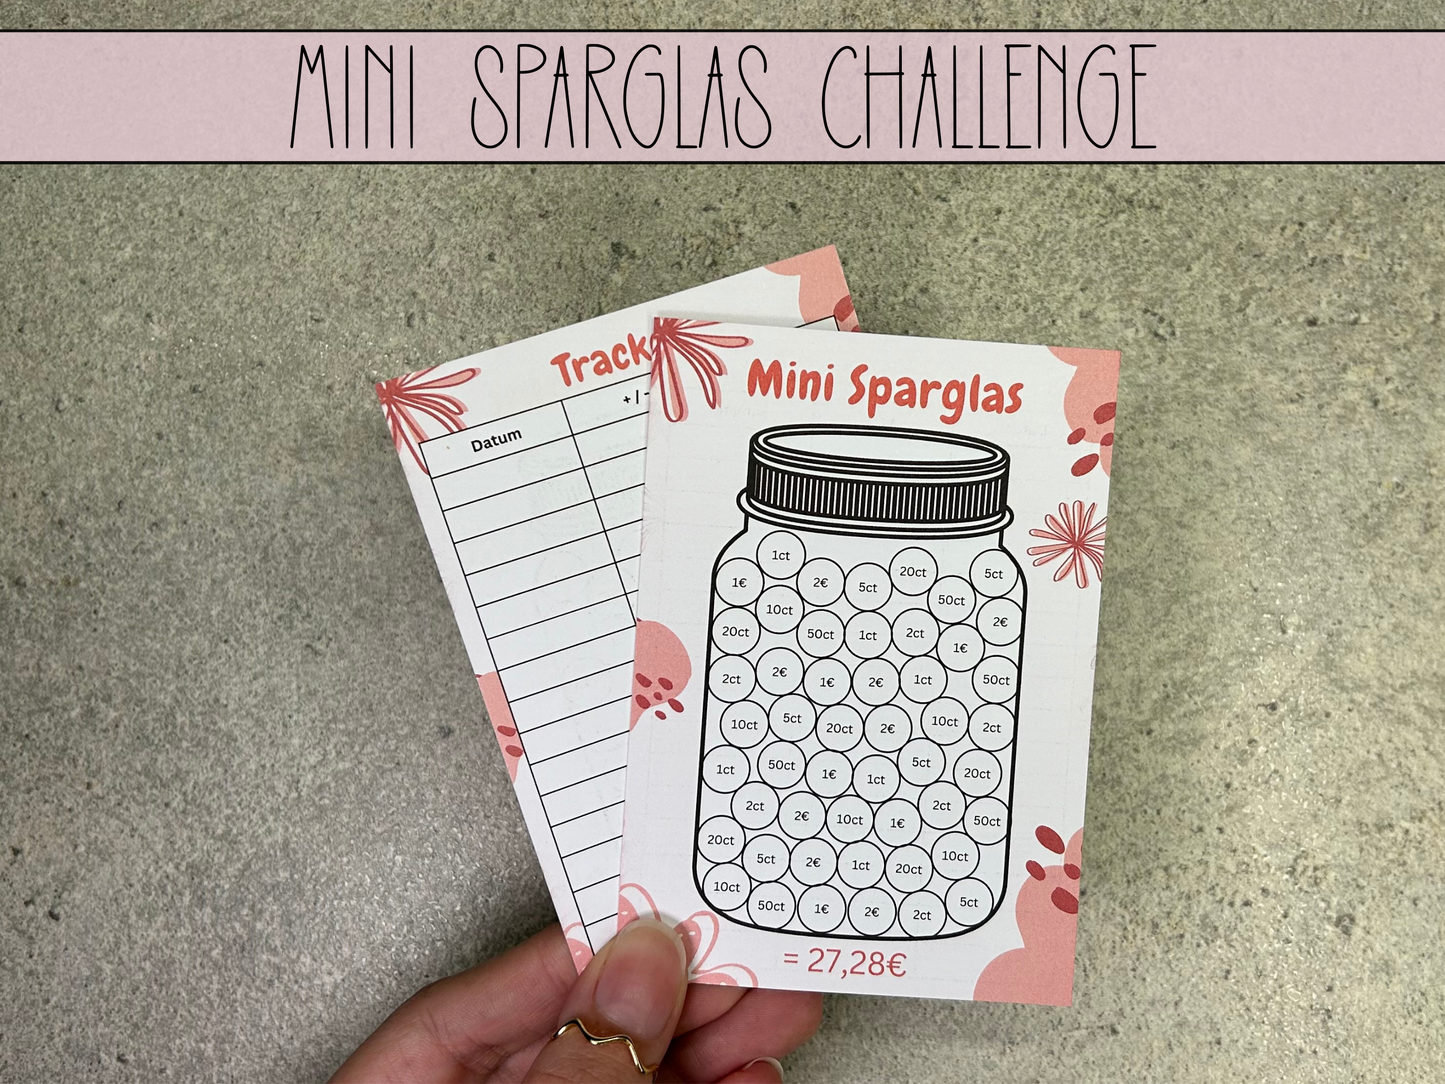 Mini Sparglas Challenge